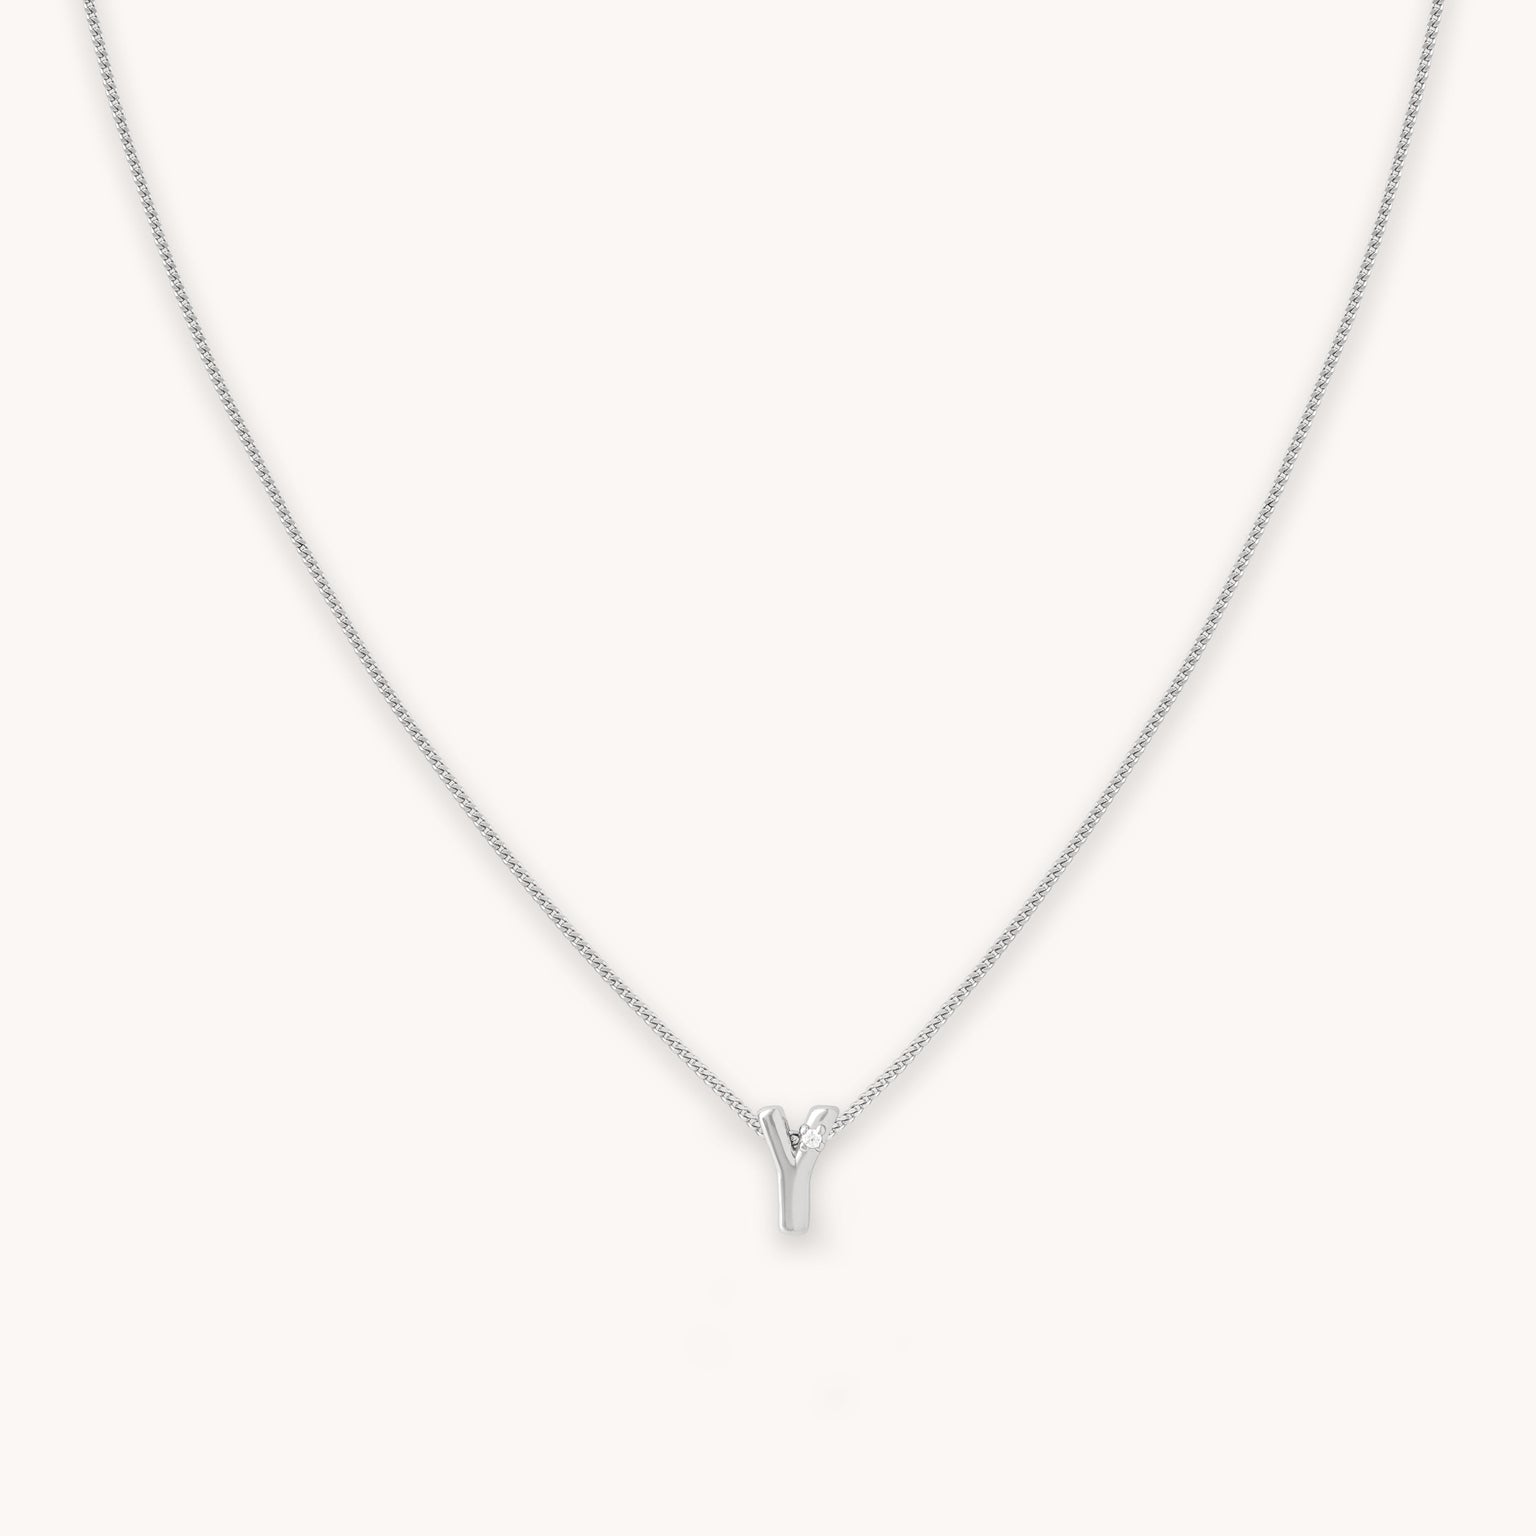 Y Initial Pendant Necklace in Silver